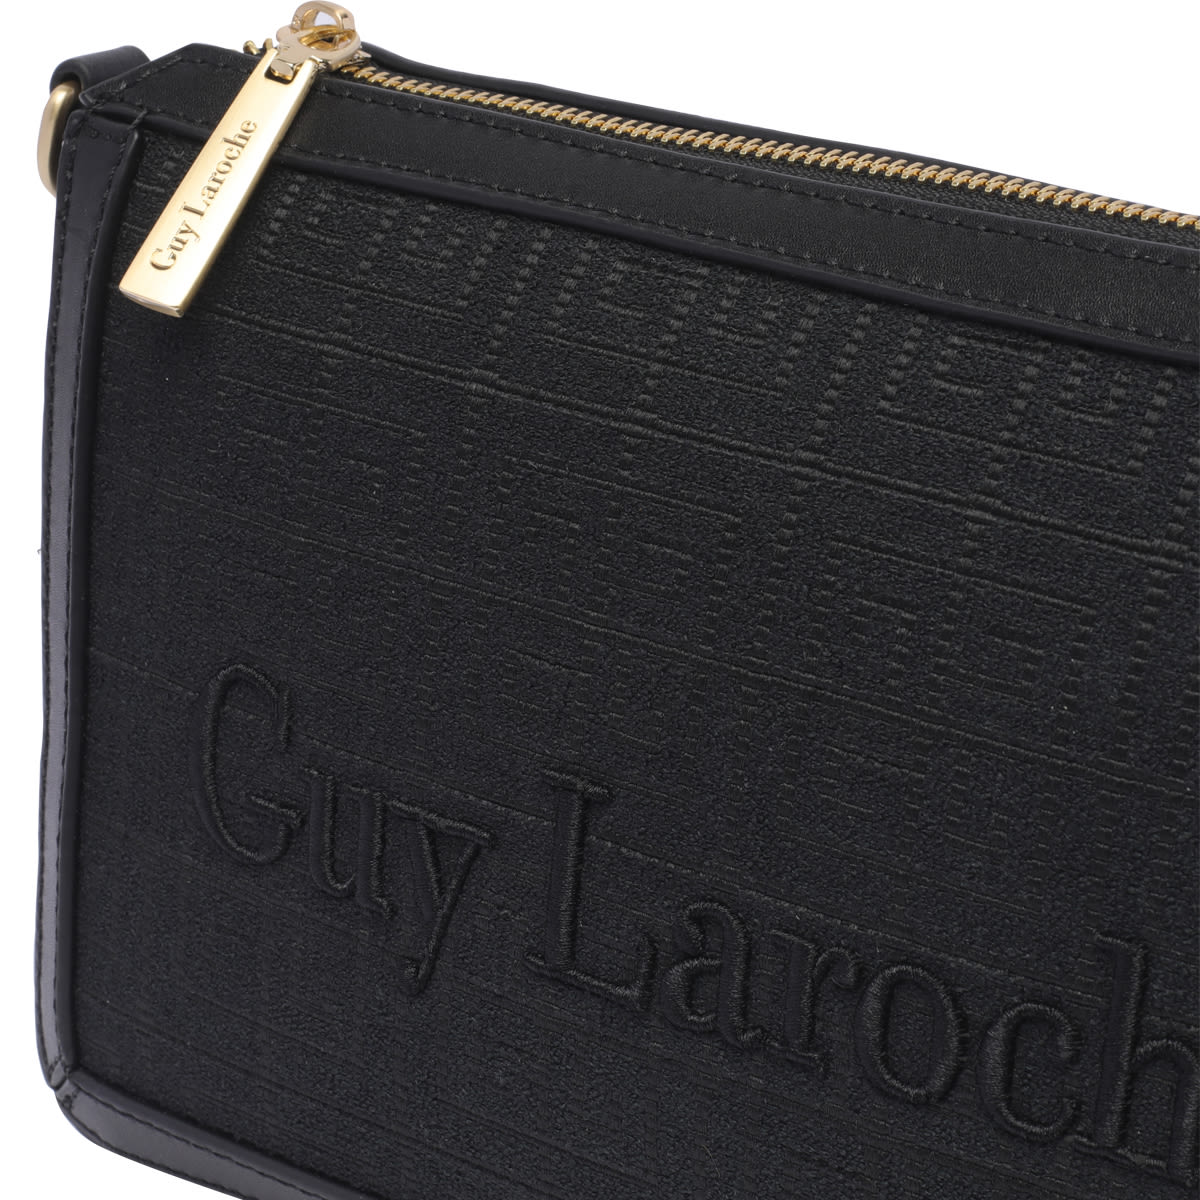 Handbag Guy Laroche Black in Synthetic - 23316652